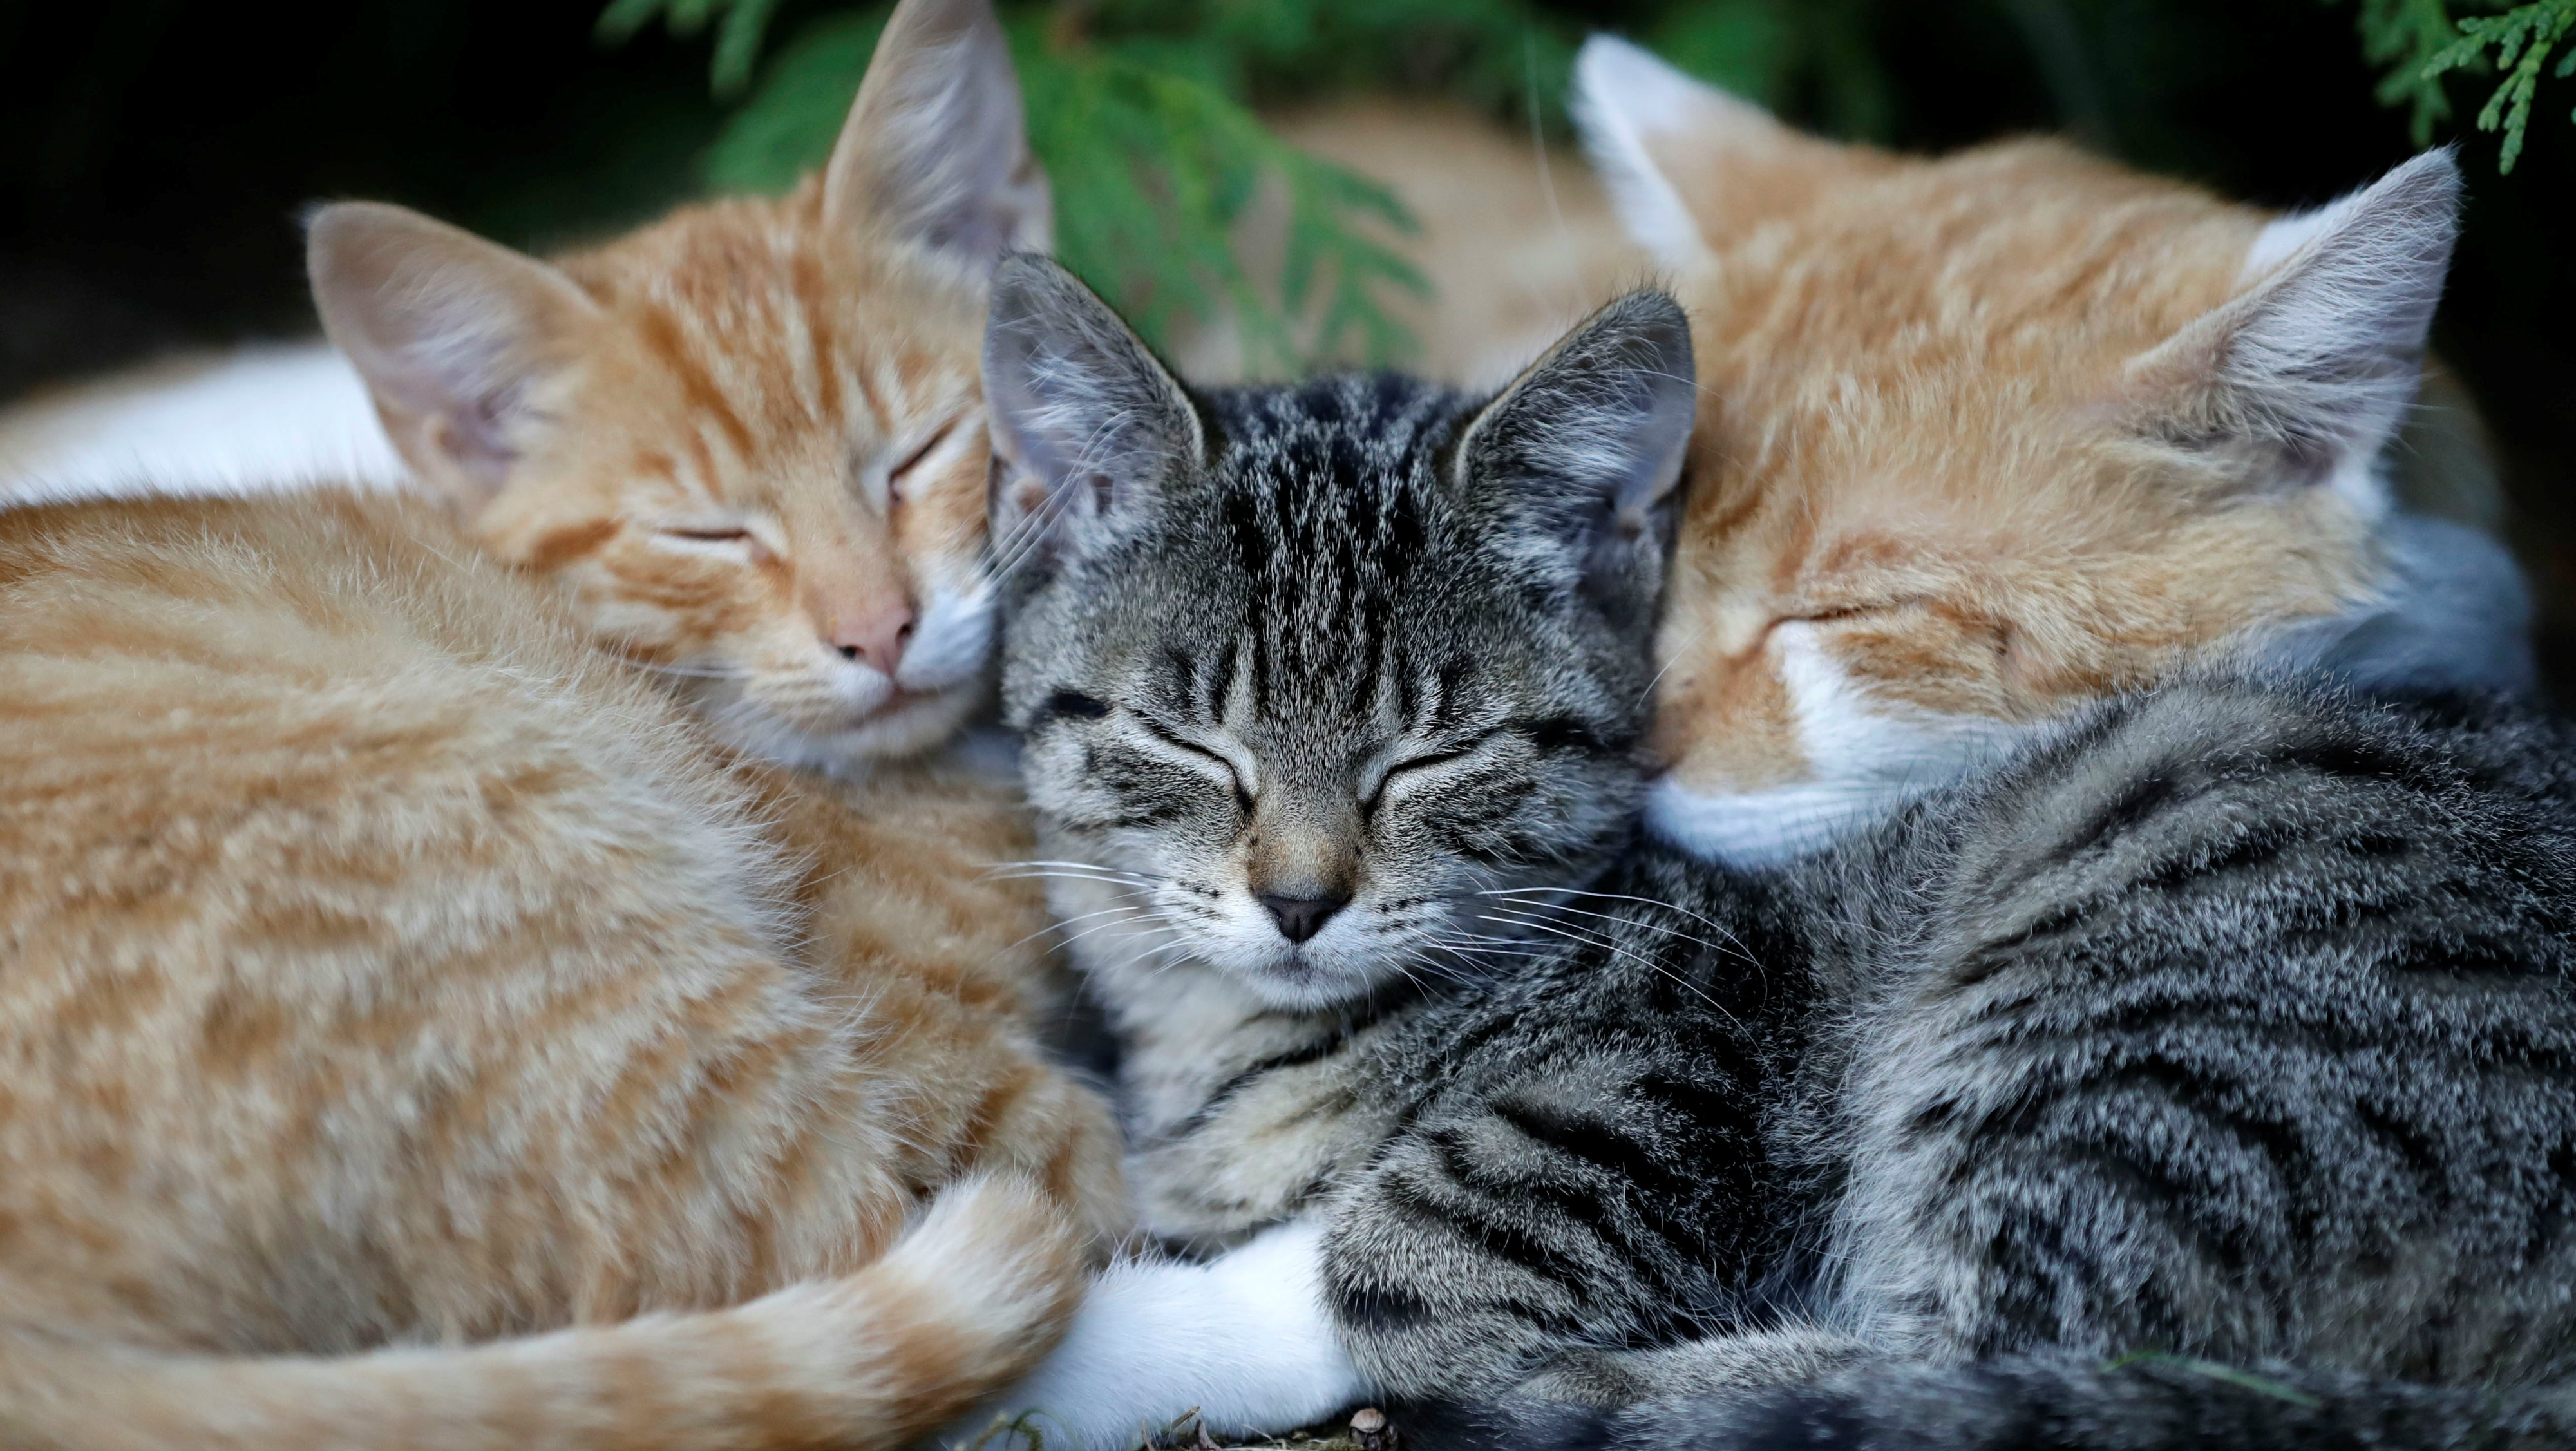 Cats-sleeping-.jpg